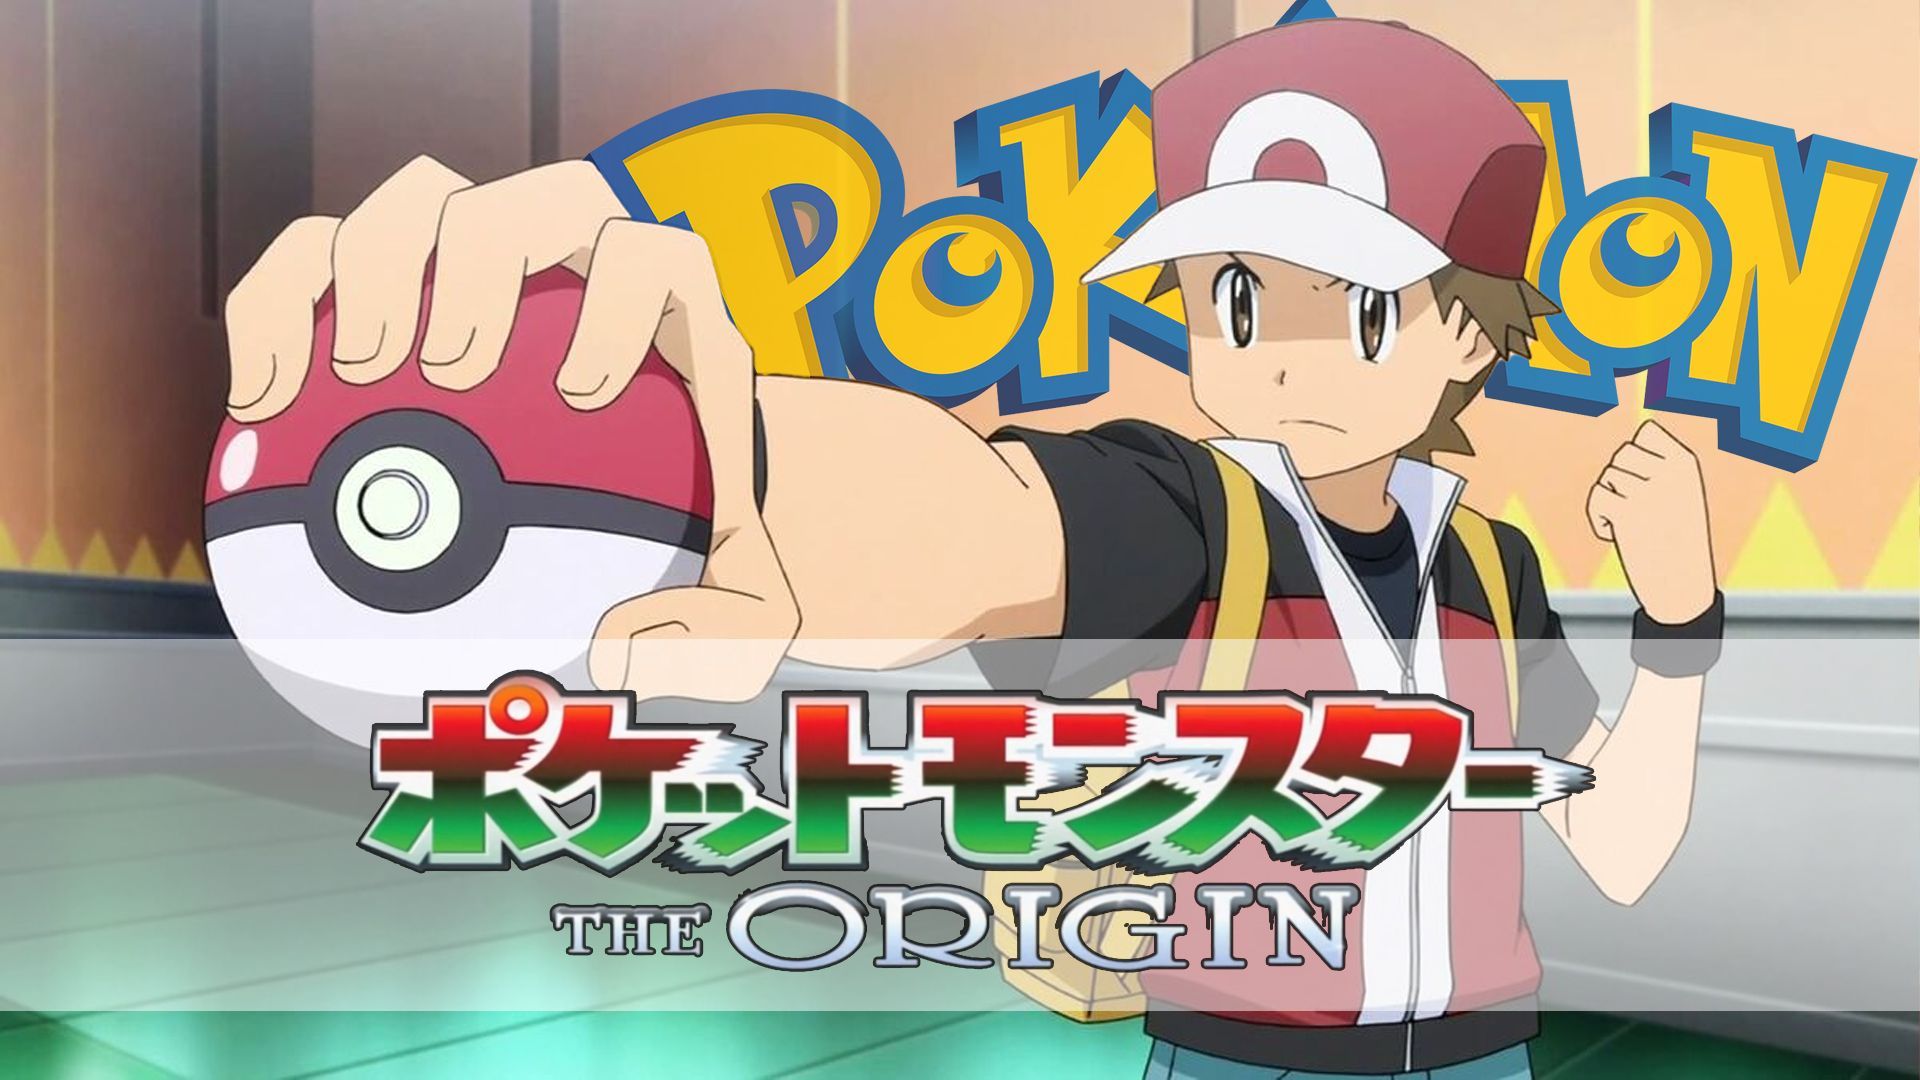 Pokémon: The Origin Anime, Fairy in TCG, and Wii U Game? - Pokémon News -  YouTube